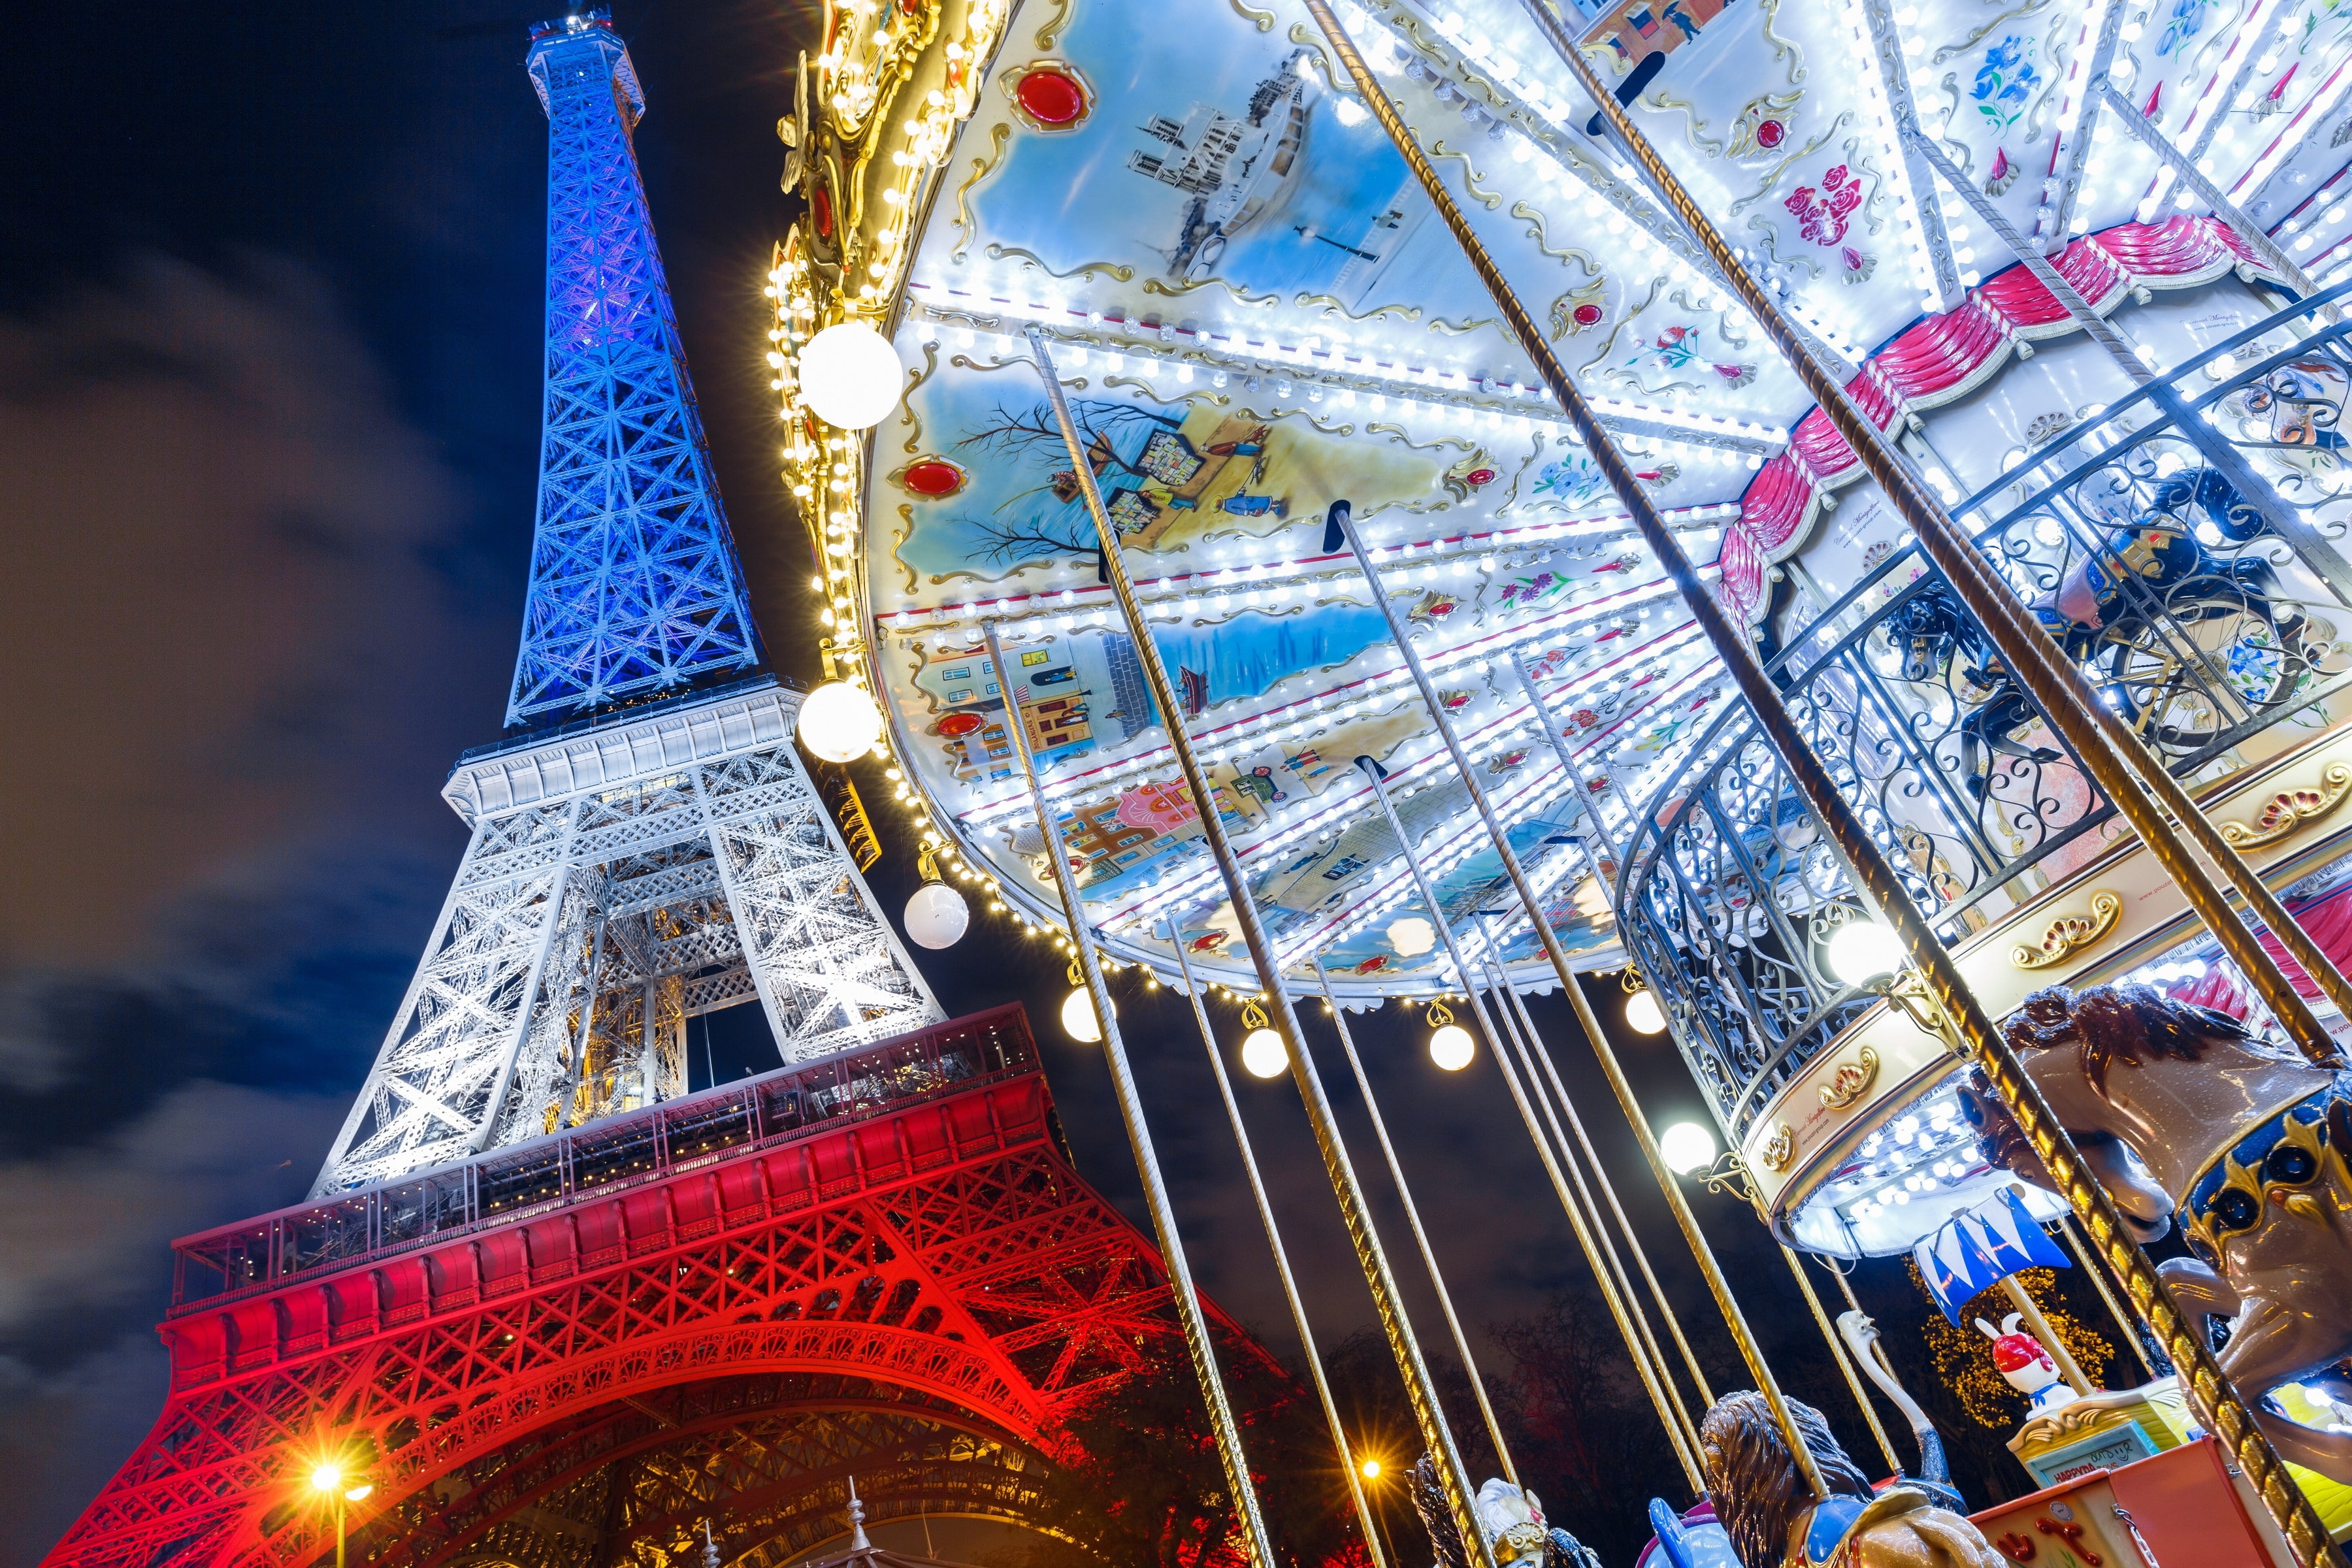 Eiffel Tower, France, Paris, eiffel tower; merry go round ride